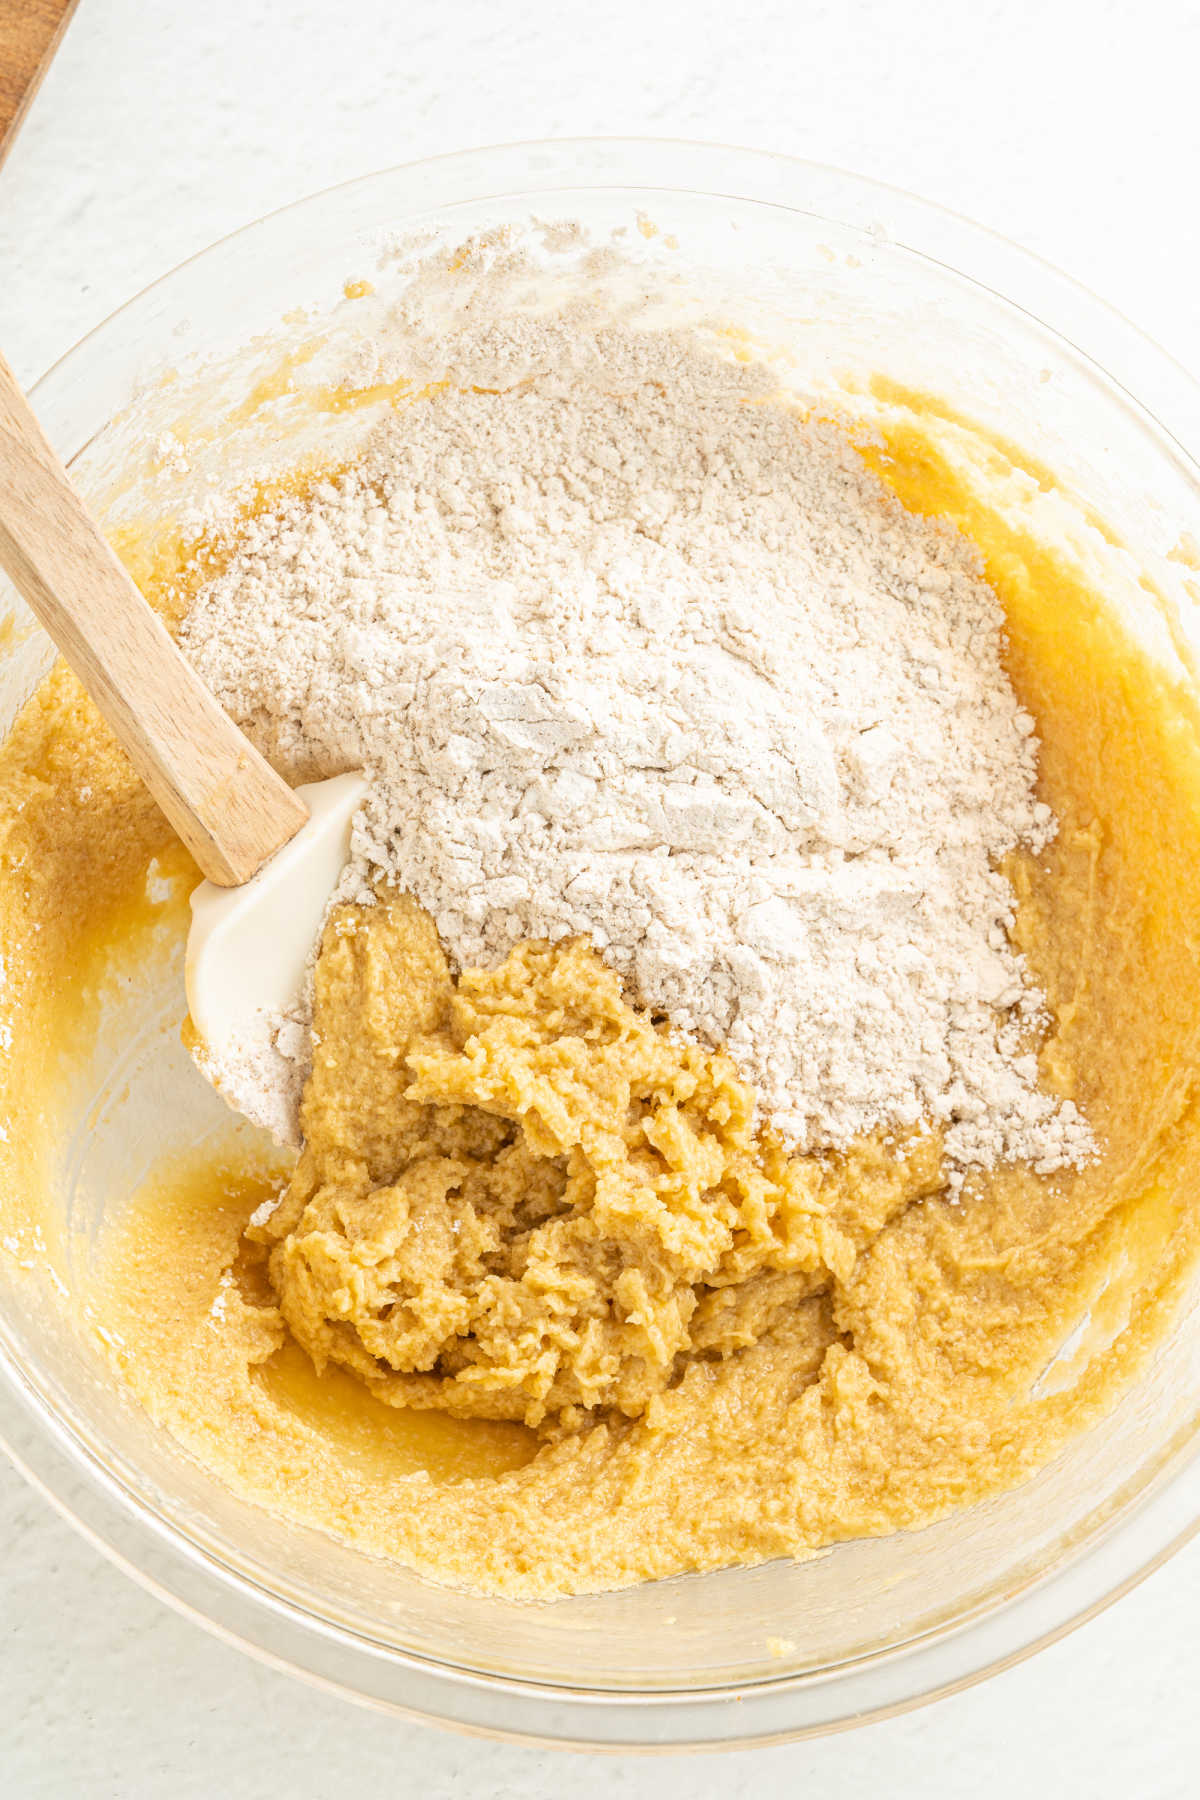 Mixing flour mixture into butter mixture to make cookie dough.